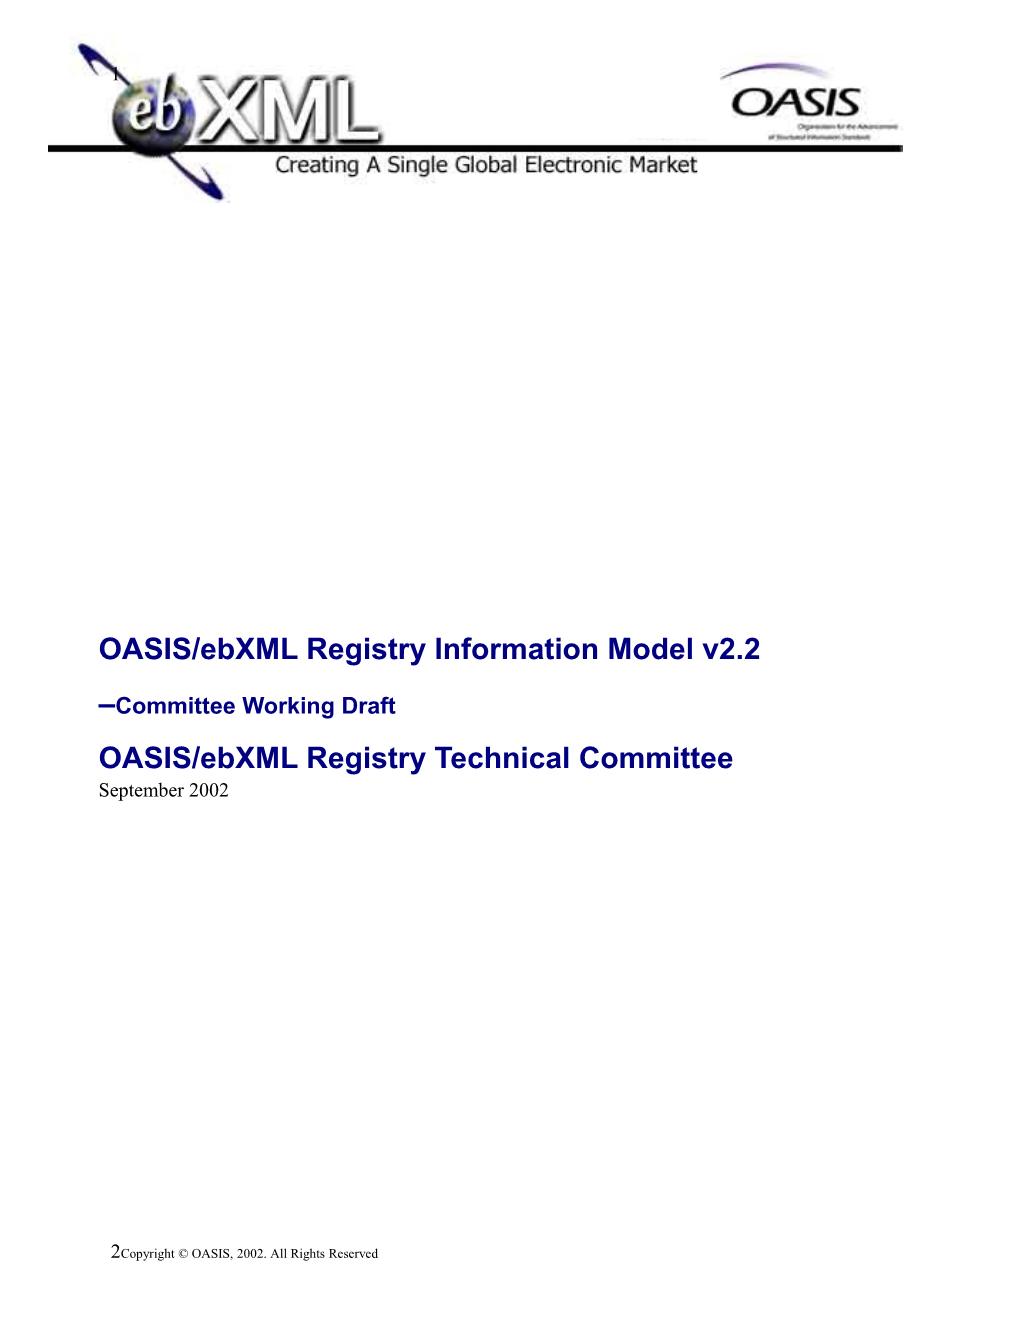 OASIS/Ebxml Registry Services Specification V2.0September 2002